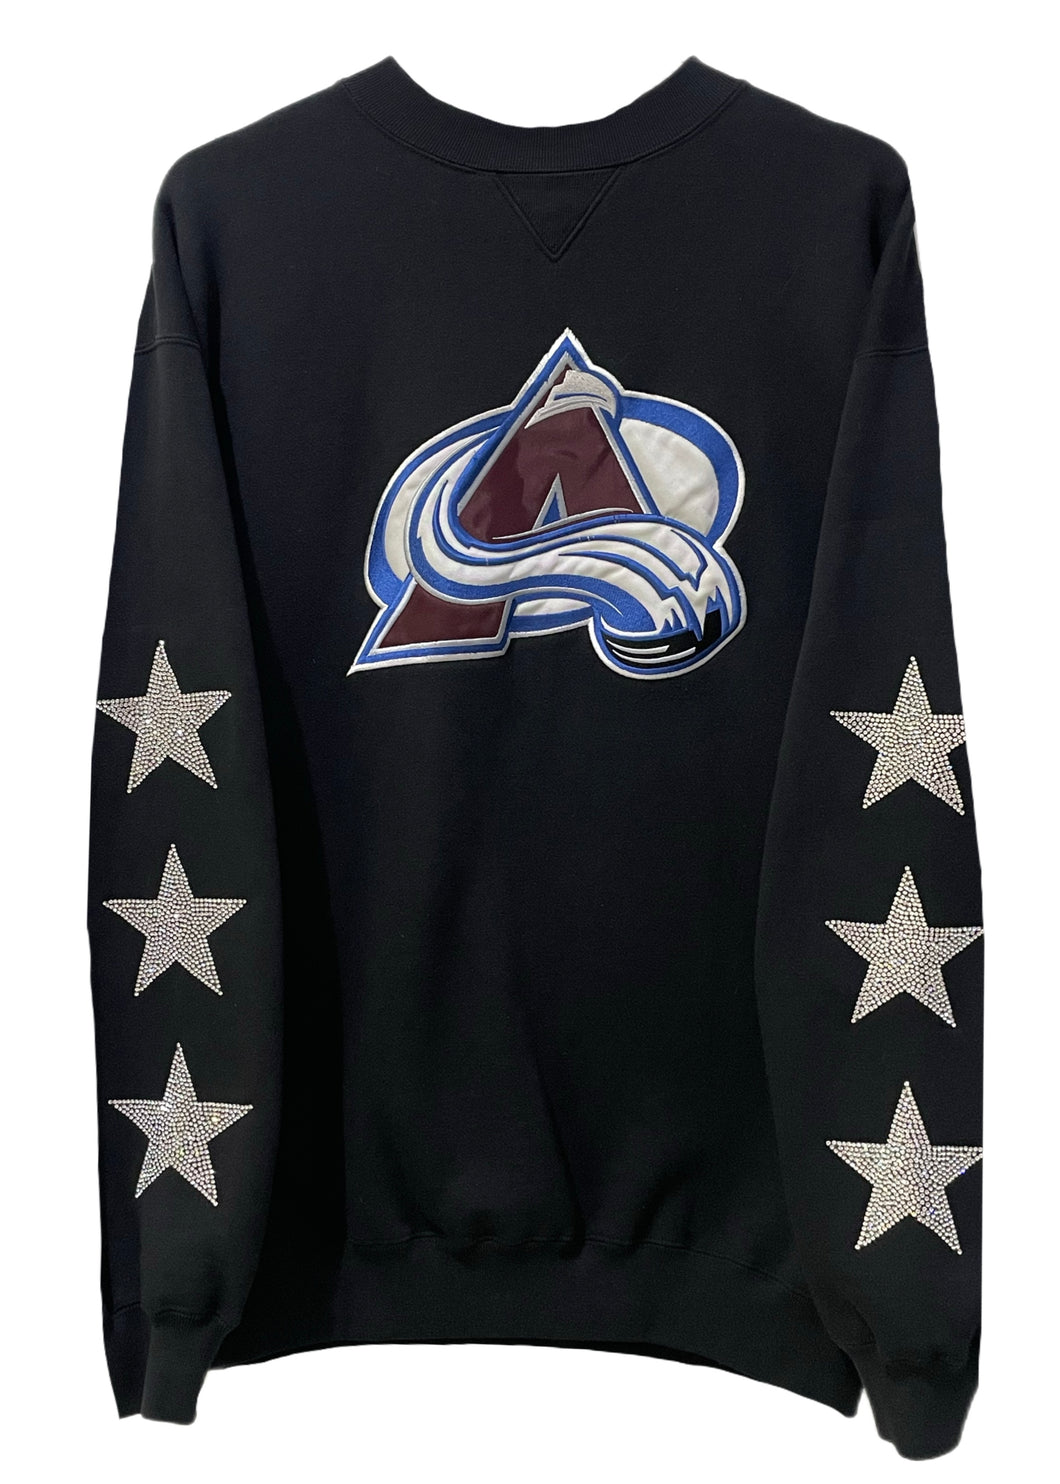 Denver Colorado Avalanche, Hockey One of a KIND Vintage Sweatshirt with Three Crystal Star Design